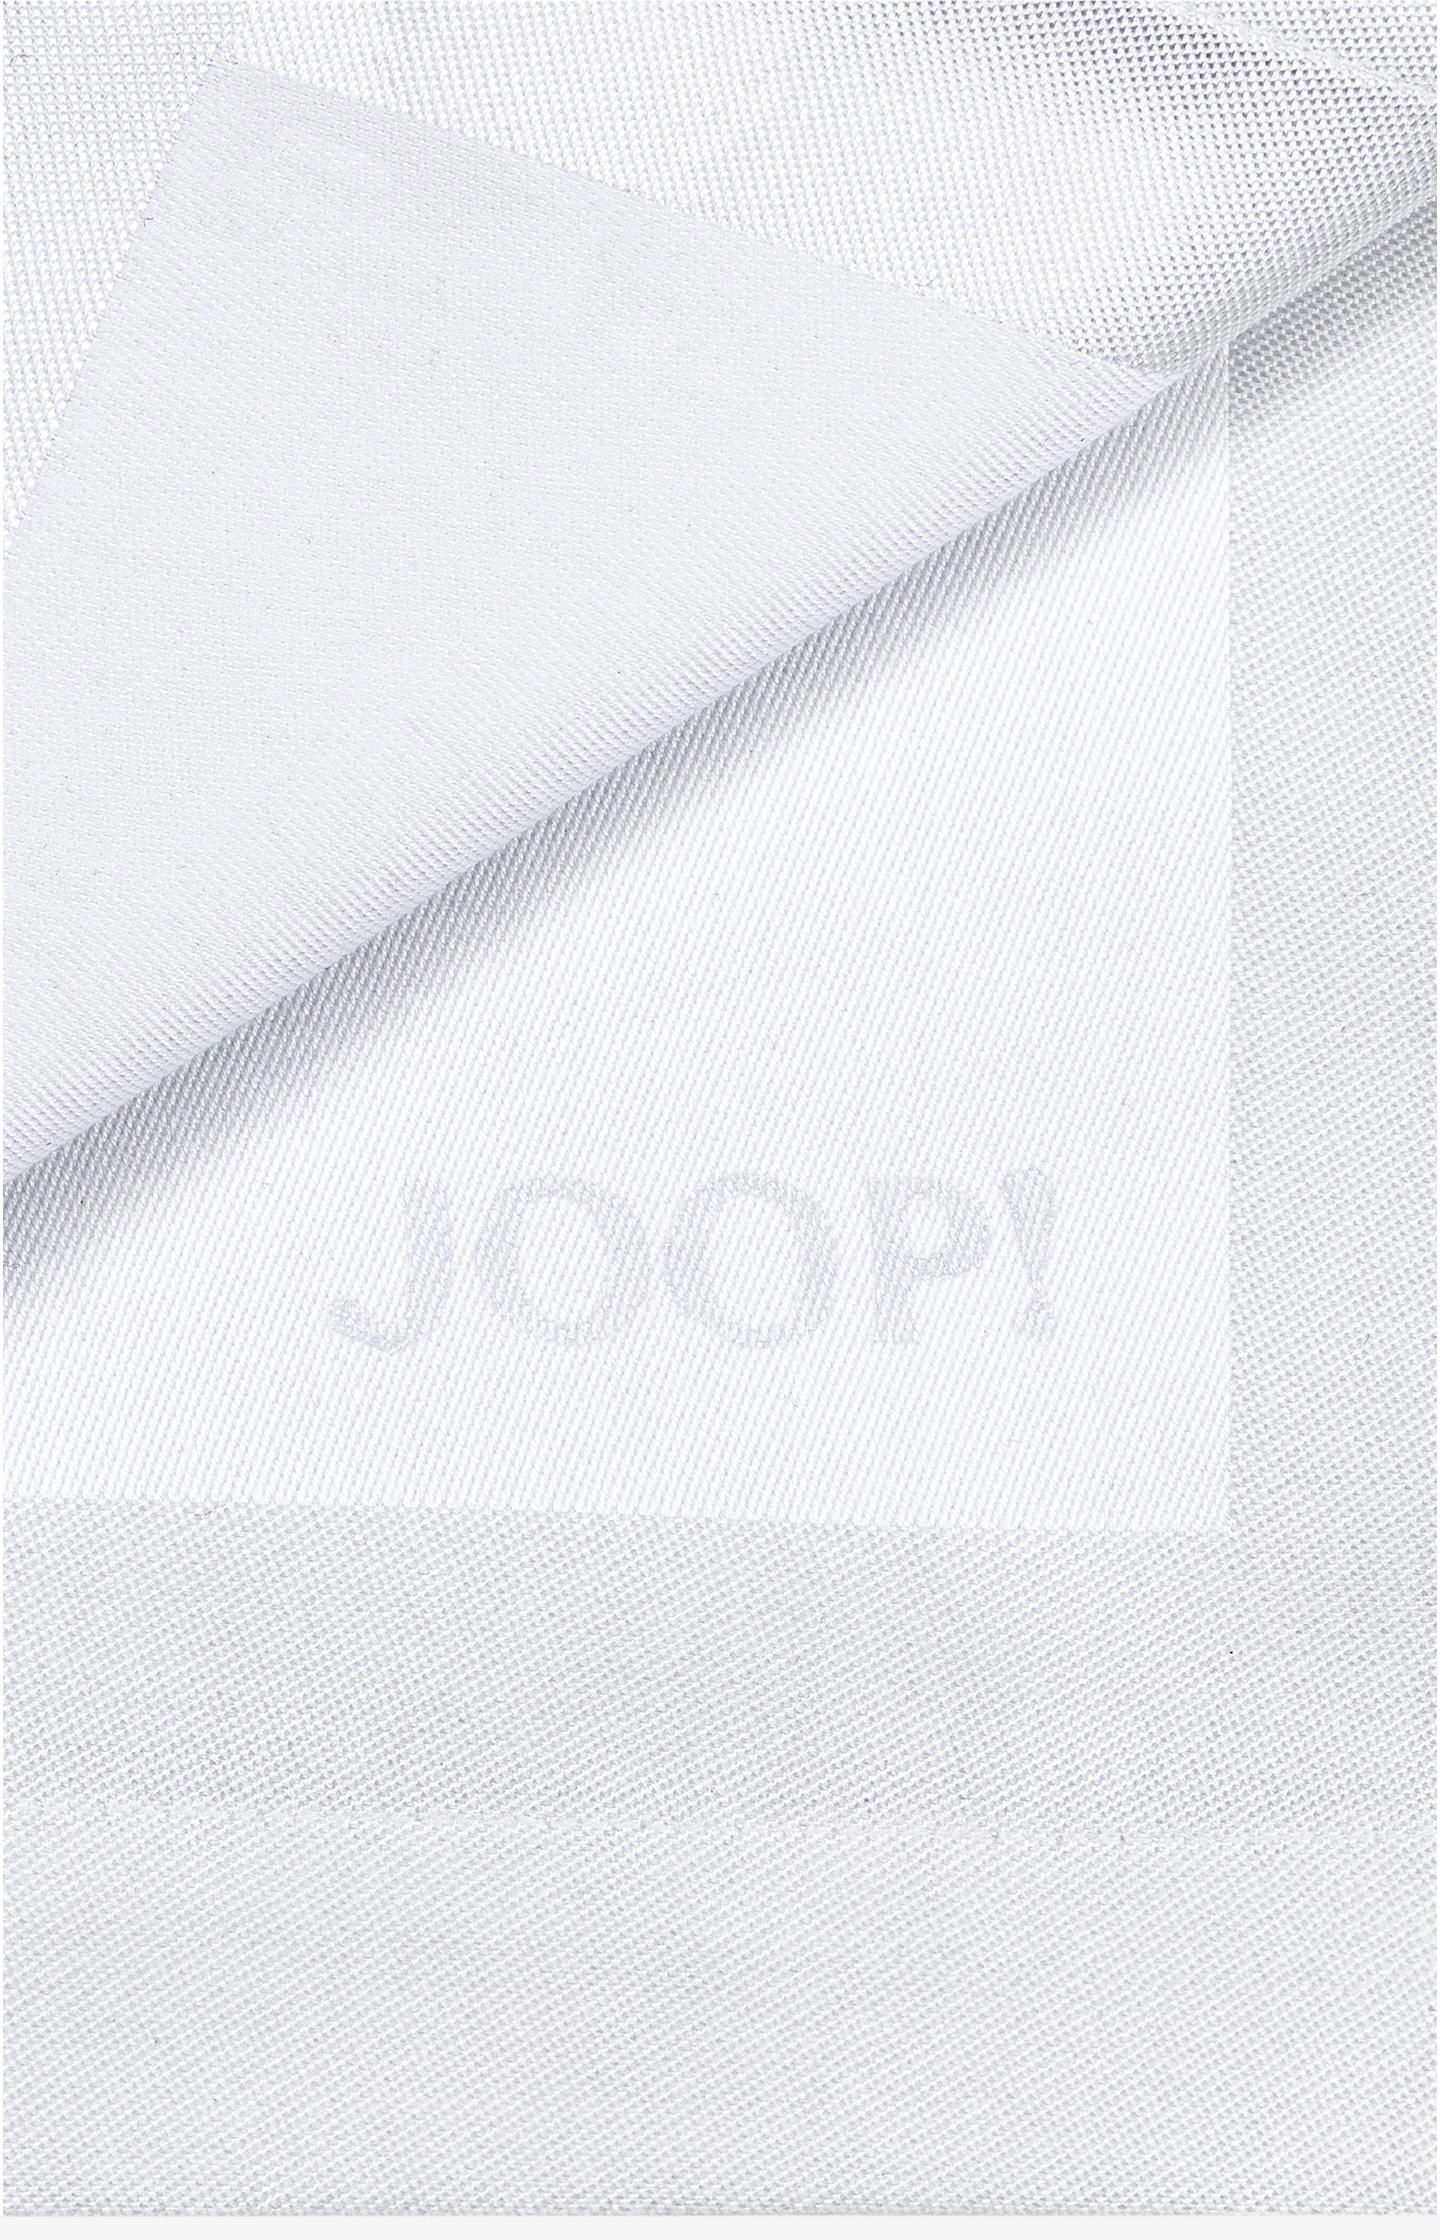 Platzsets JOOP! Signature - 2er Set in Weiß, 36 x 48 cm - im JOOP!  Online-Shop